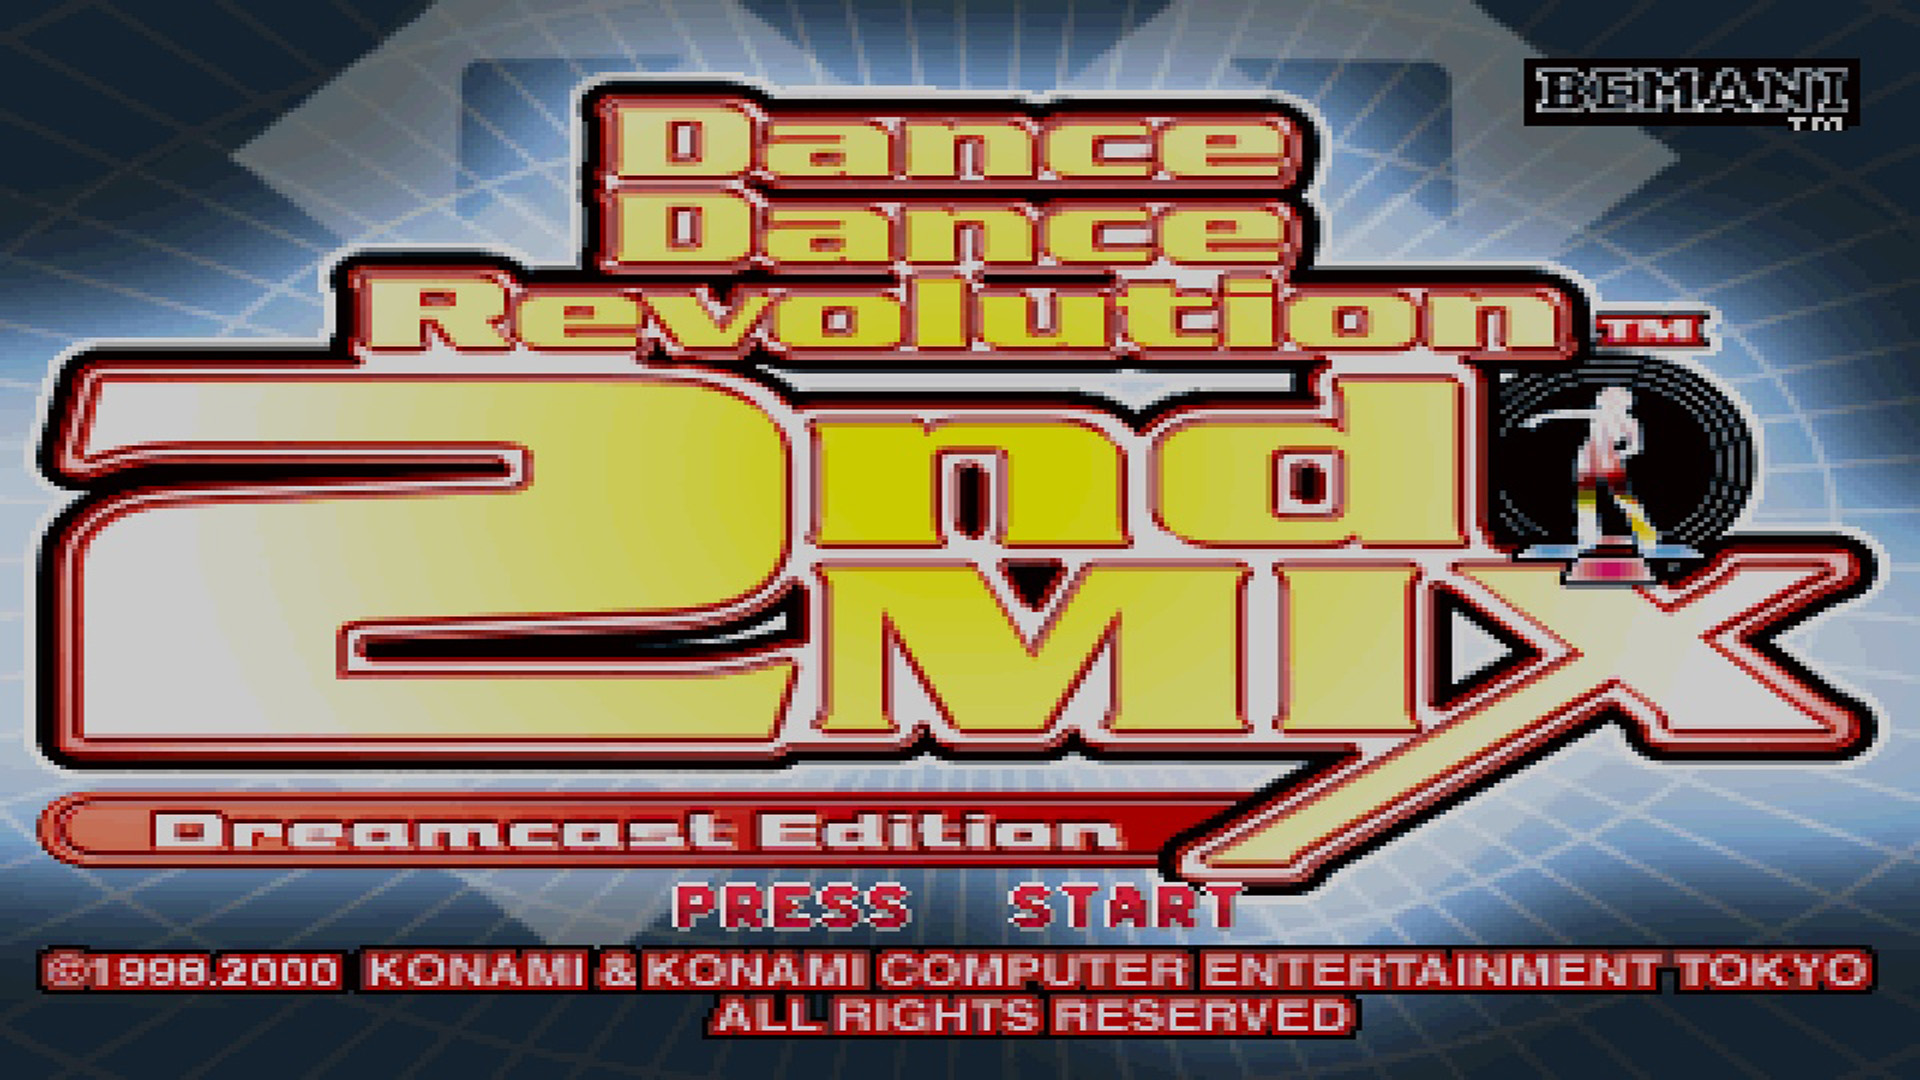 Dance Dance Revolution: 2nd Mix (Japan) DC ISO Download - CDRomance